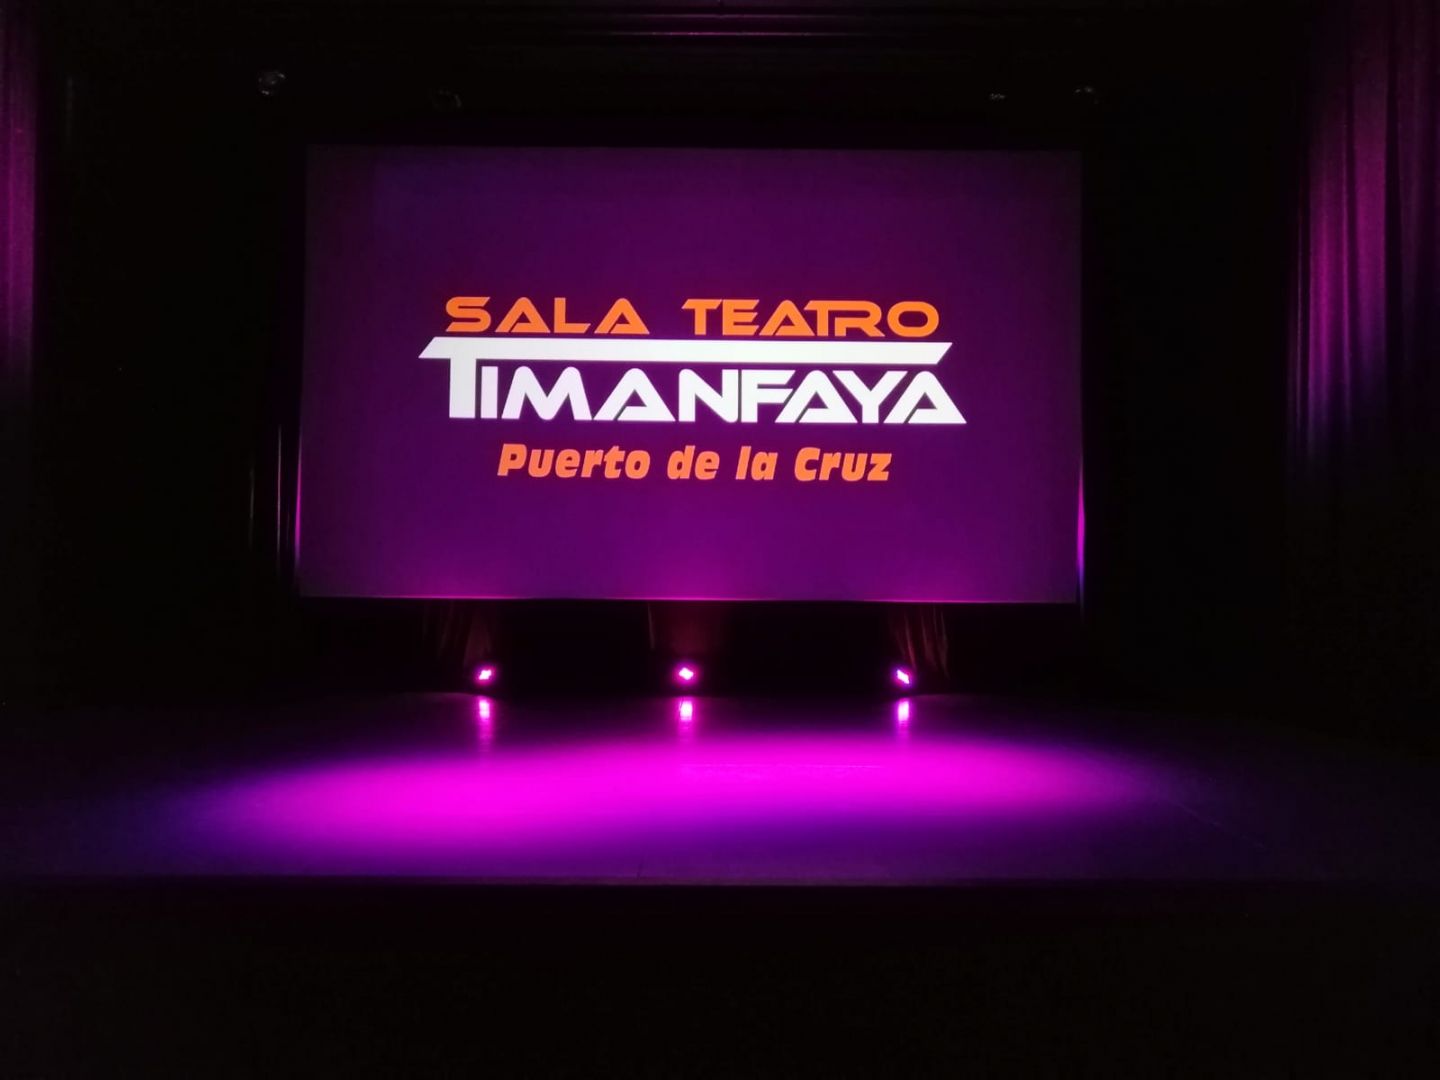 Sala Teatro Timanfaya